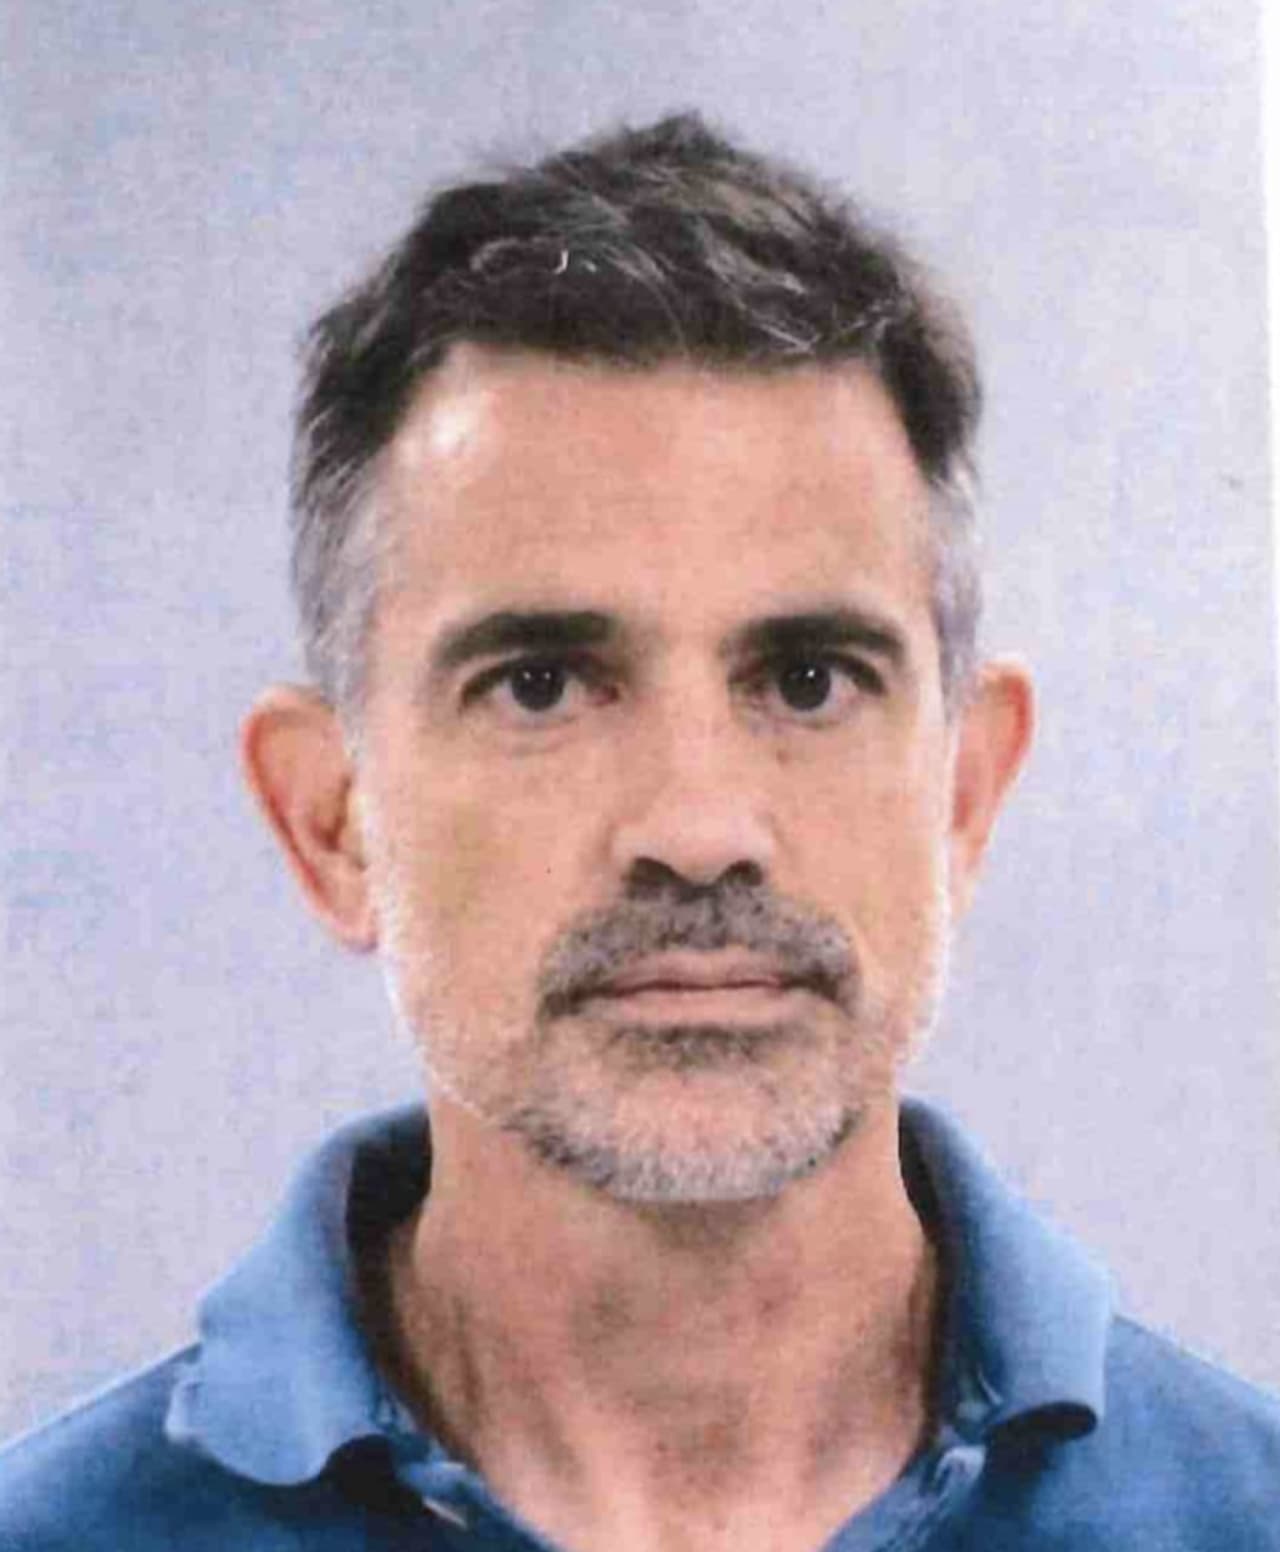 Fotis Dulos following his second arrest.